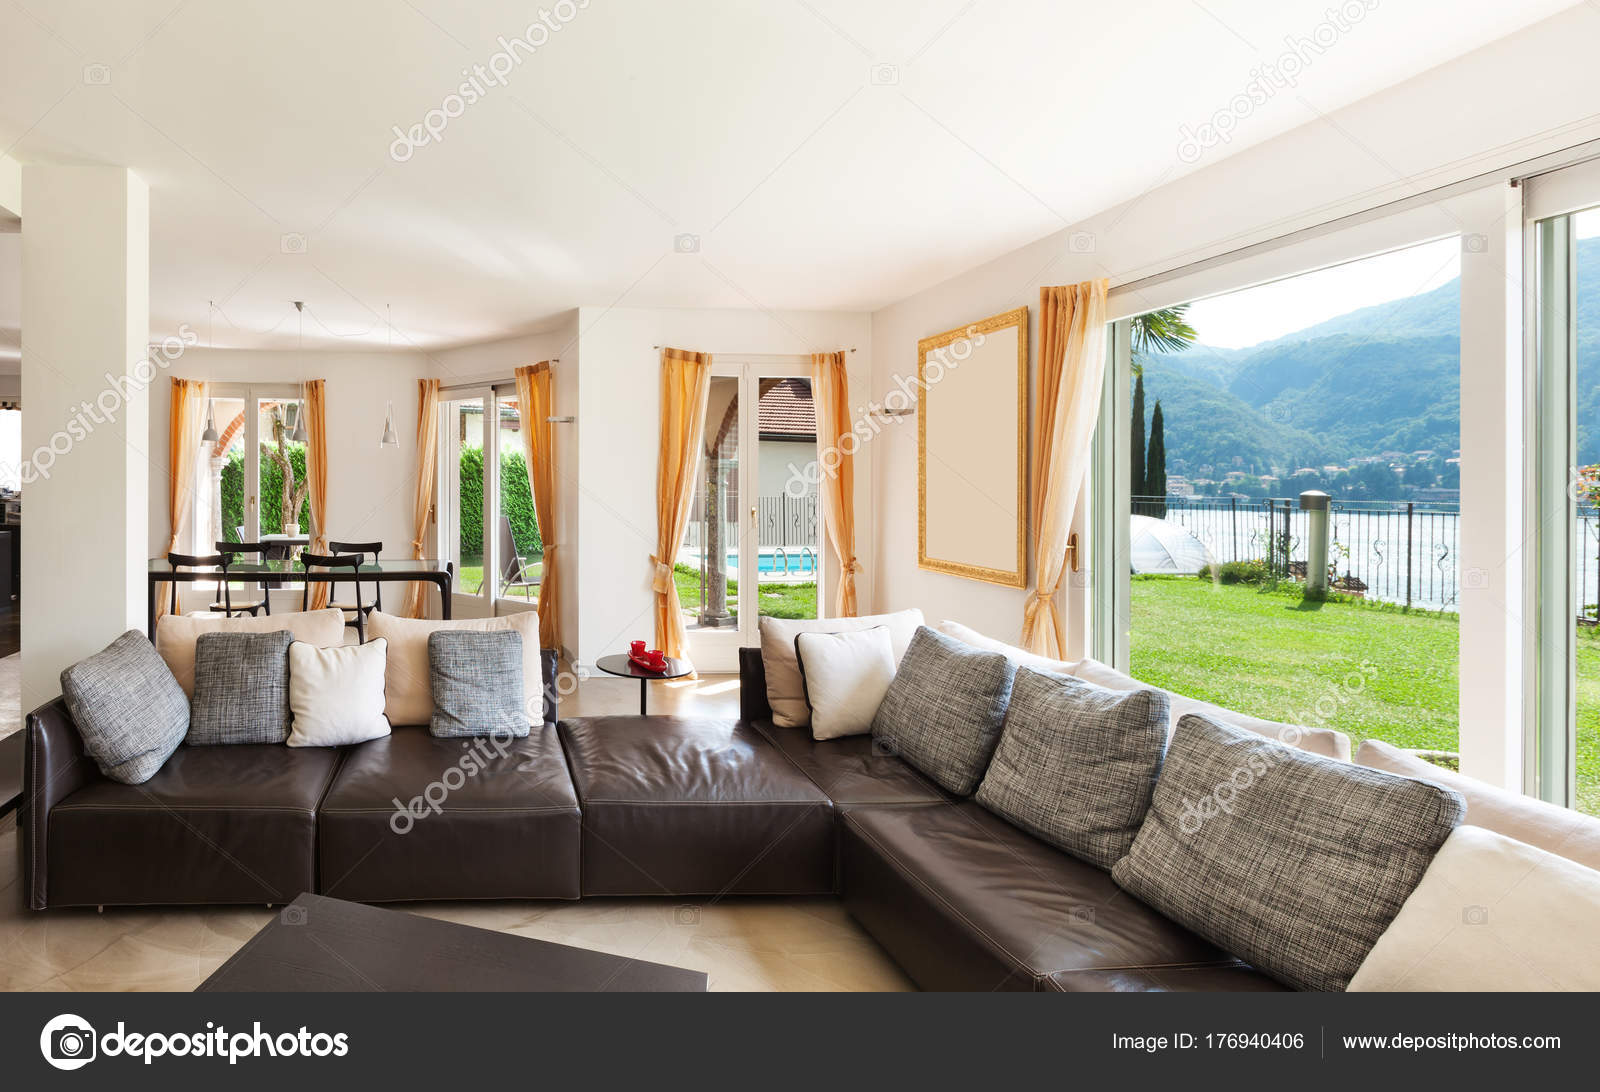 Nice Living Room Stock Photo C Zveiger 176940406